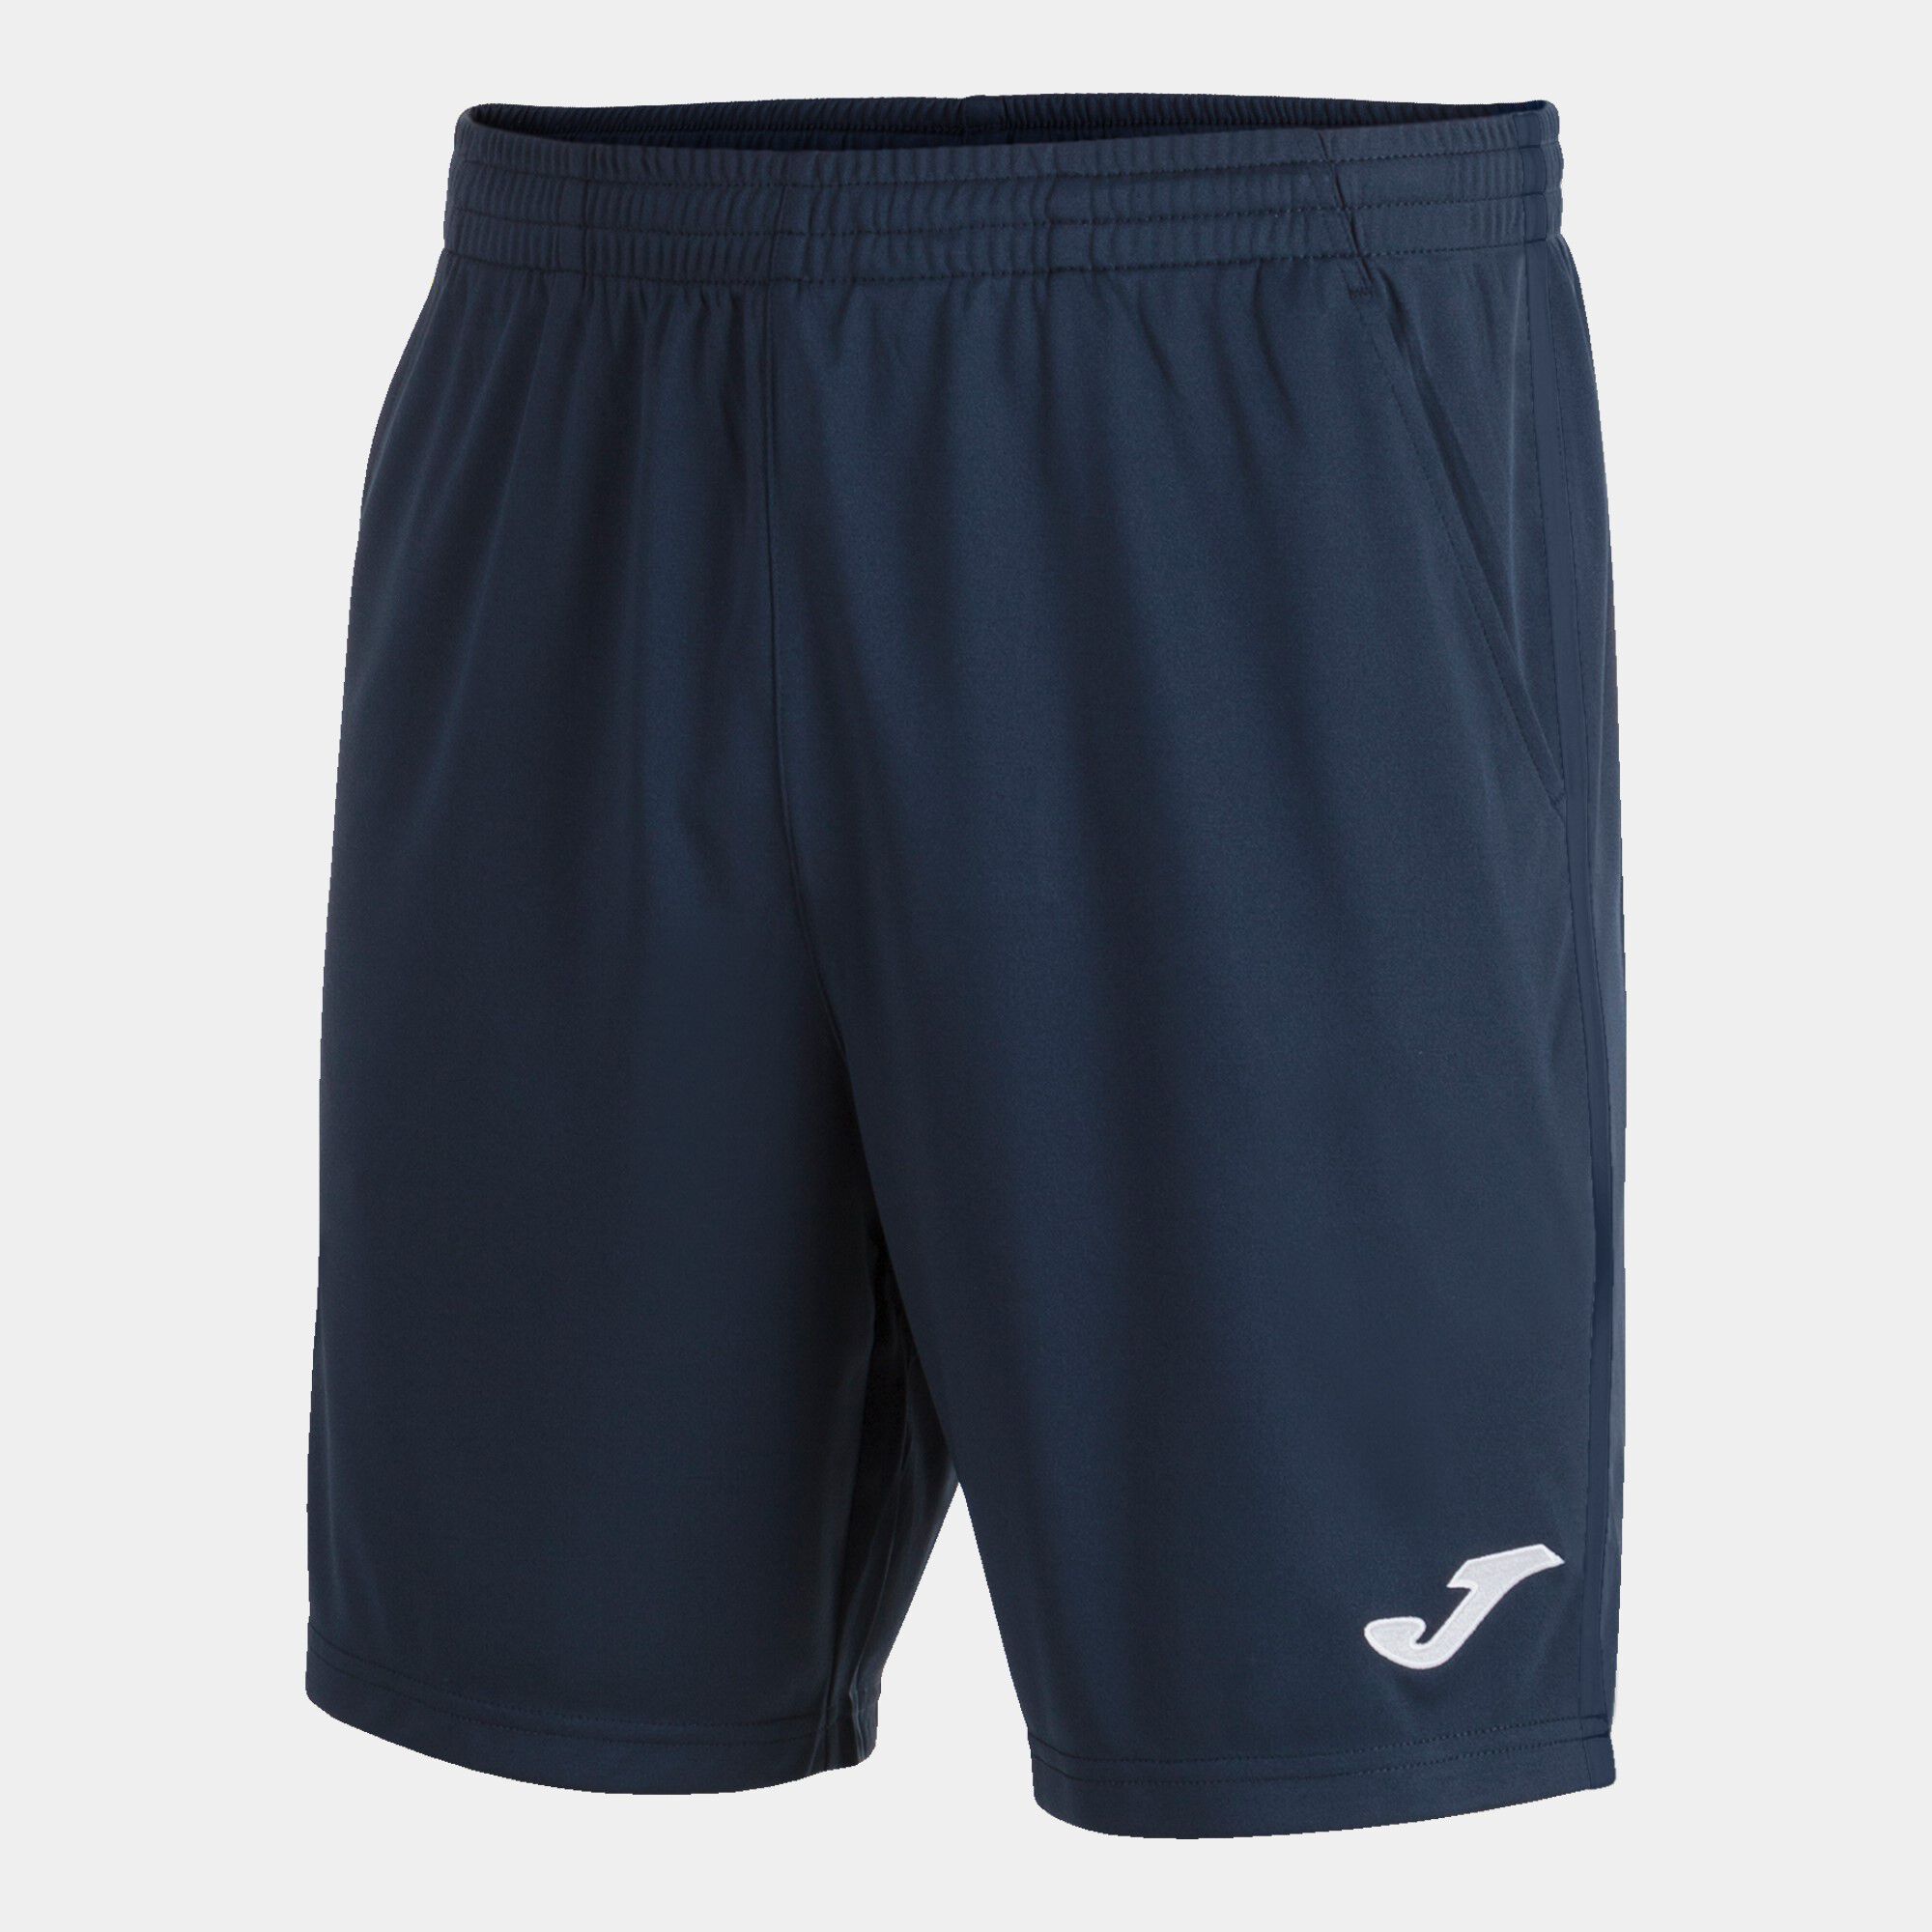 Bermuda shorts man Open III navy blue